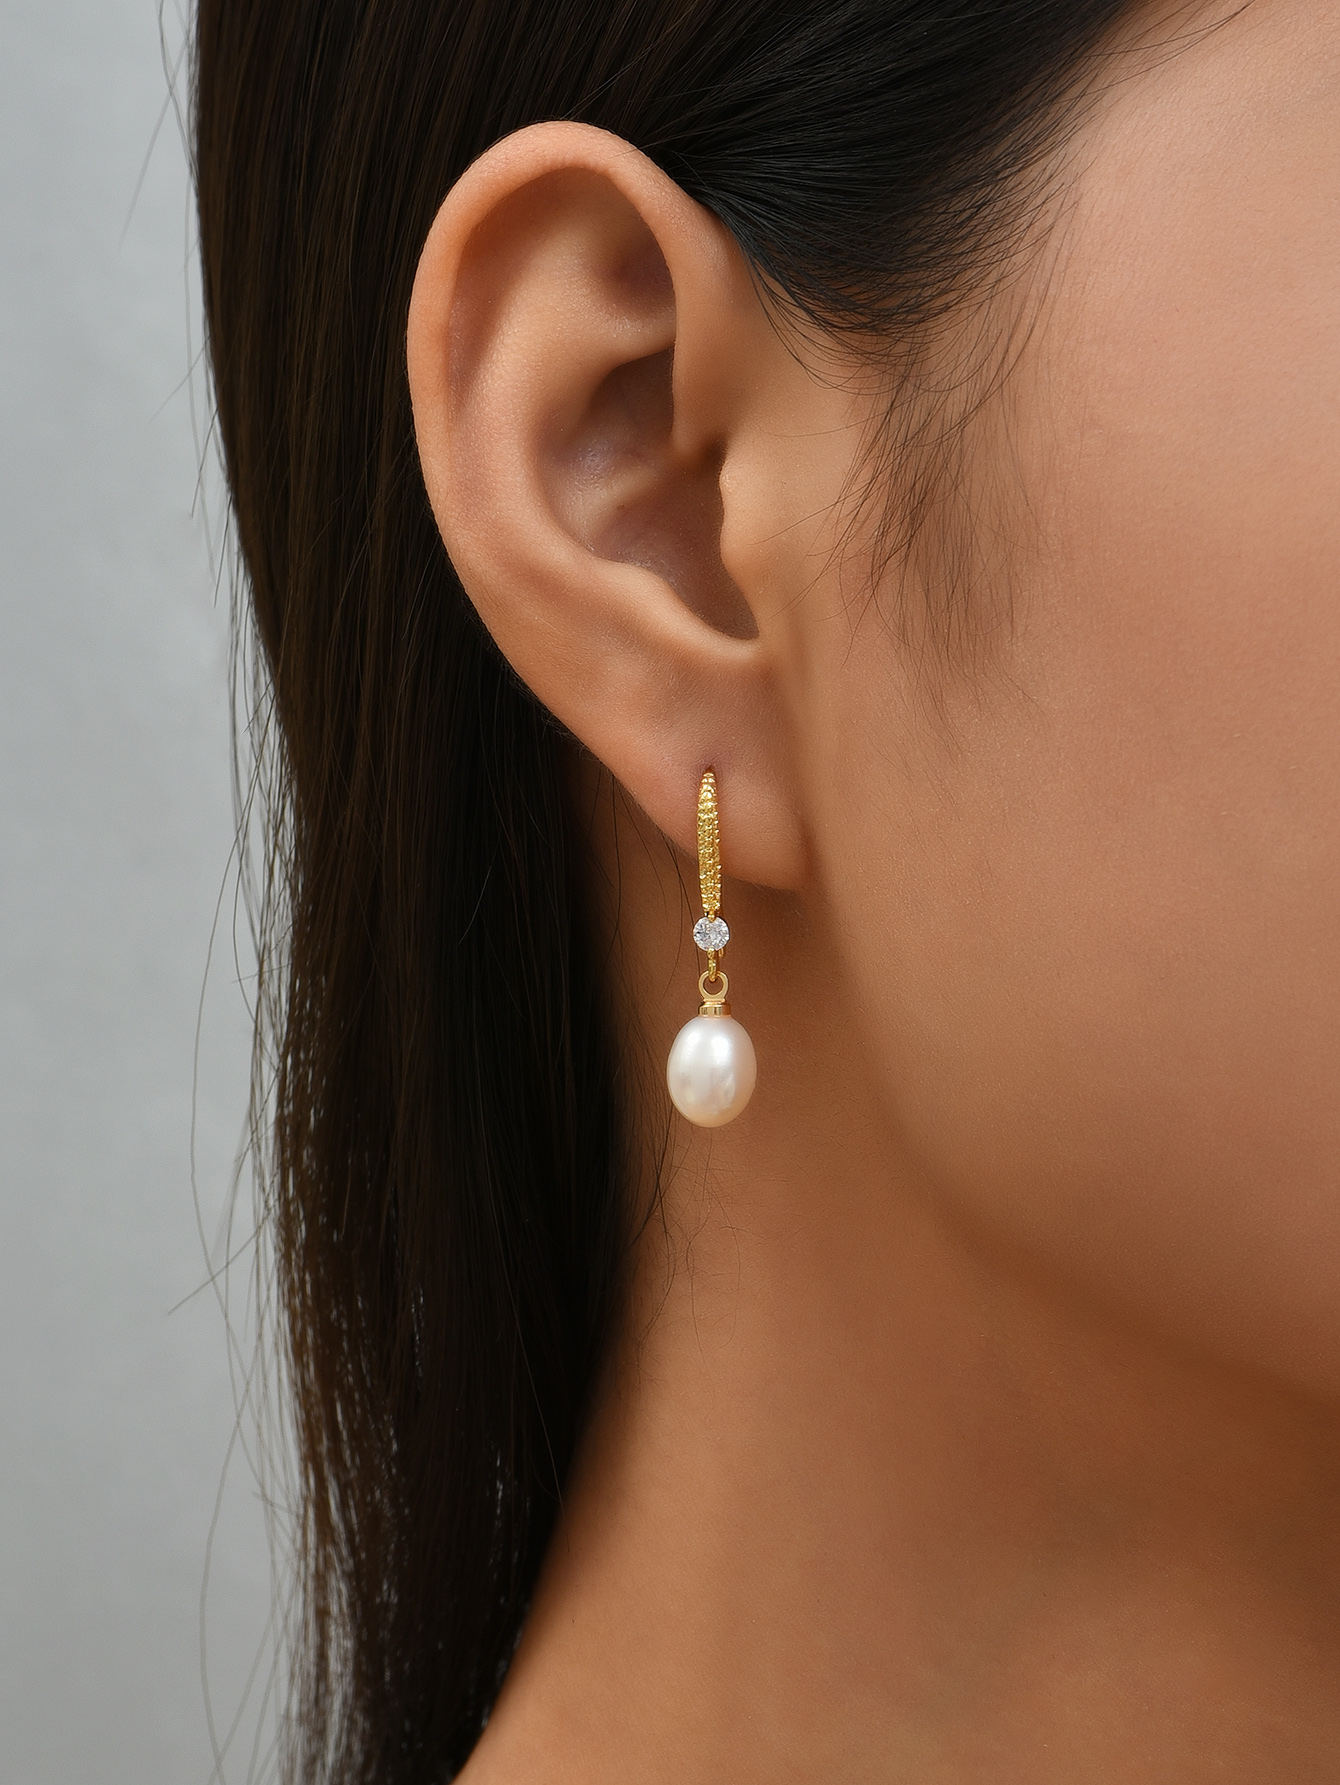 10 Pairs - Pearl Drop Hook Zircon Crystals Gold Plated Earrings|GCJ396|UK SELLER